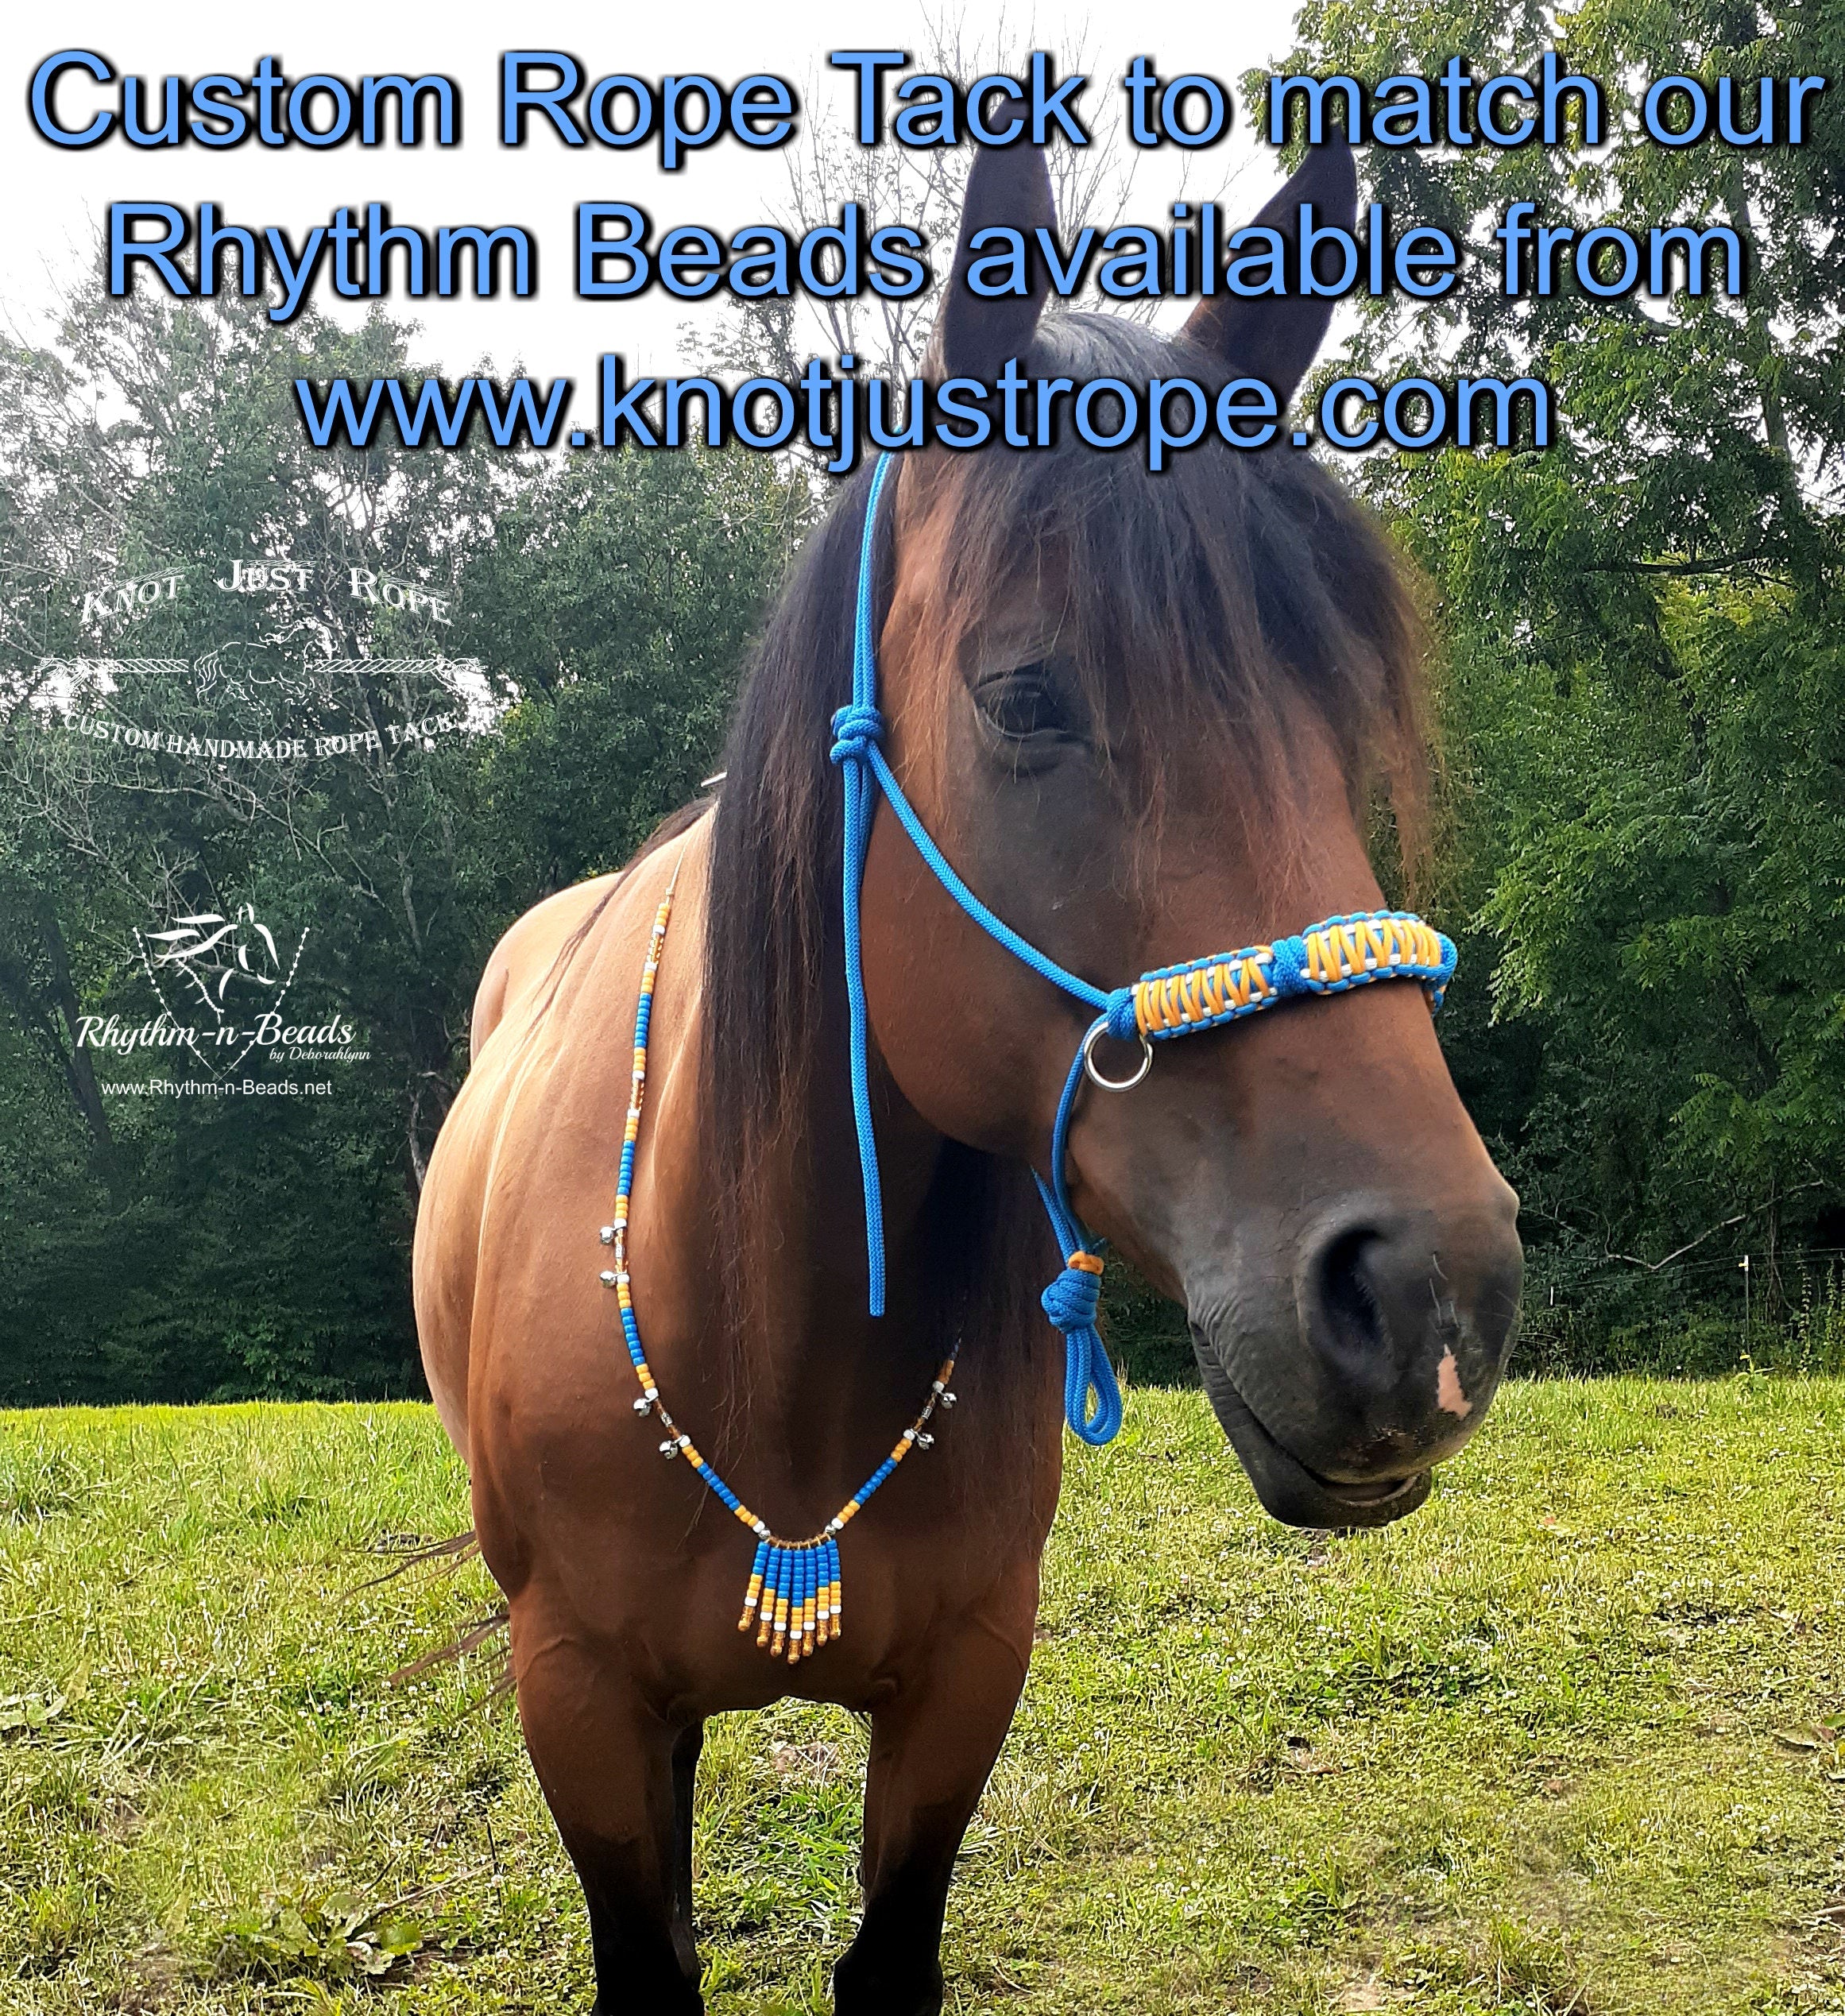 Rhythm Beads,CALICO CORN , Bear Bells, Horse photo shoot accessories, Horse Necklace, Halloween horse tack, Rhythm Beads for horses